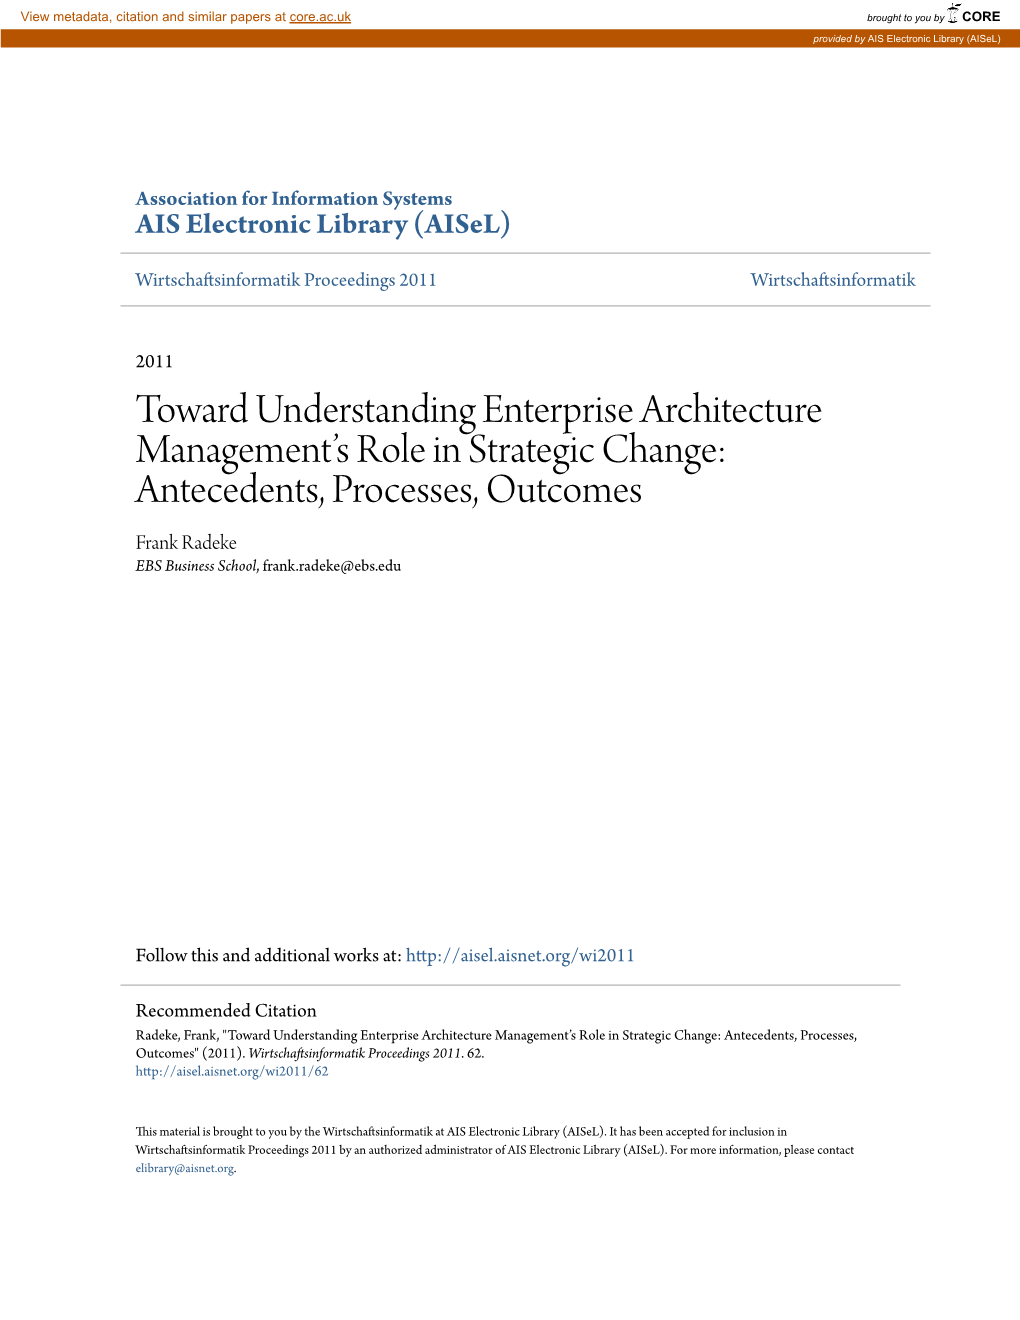 Toward Understanding Enterprise Architecture Managementâ